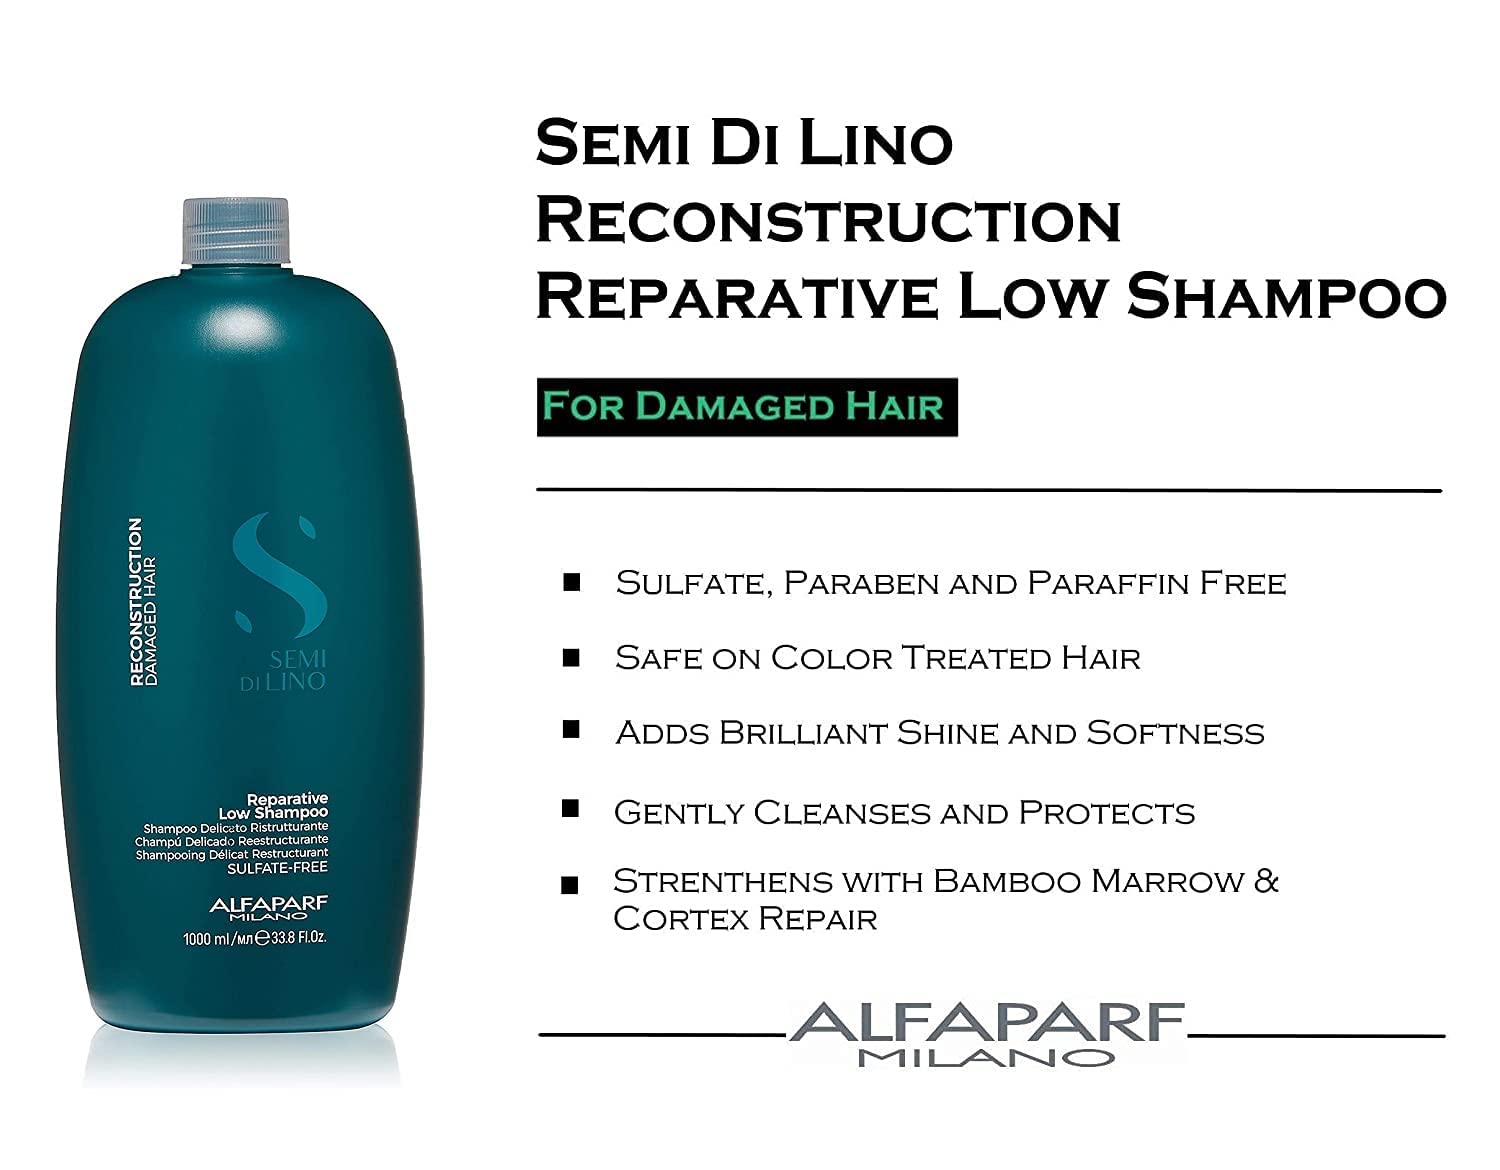 Alfaparf Milano Semi di Lino Reconstruction Reparative Shampoo for Damaged Hair - Sulfate and Paraffin Free - Safe on Color Treated Hair - Vegan Formula - Professional Hair Repair